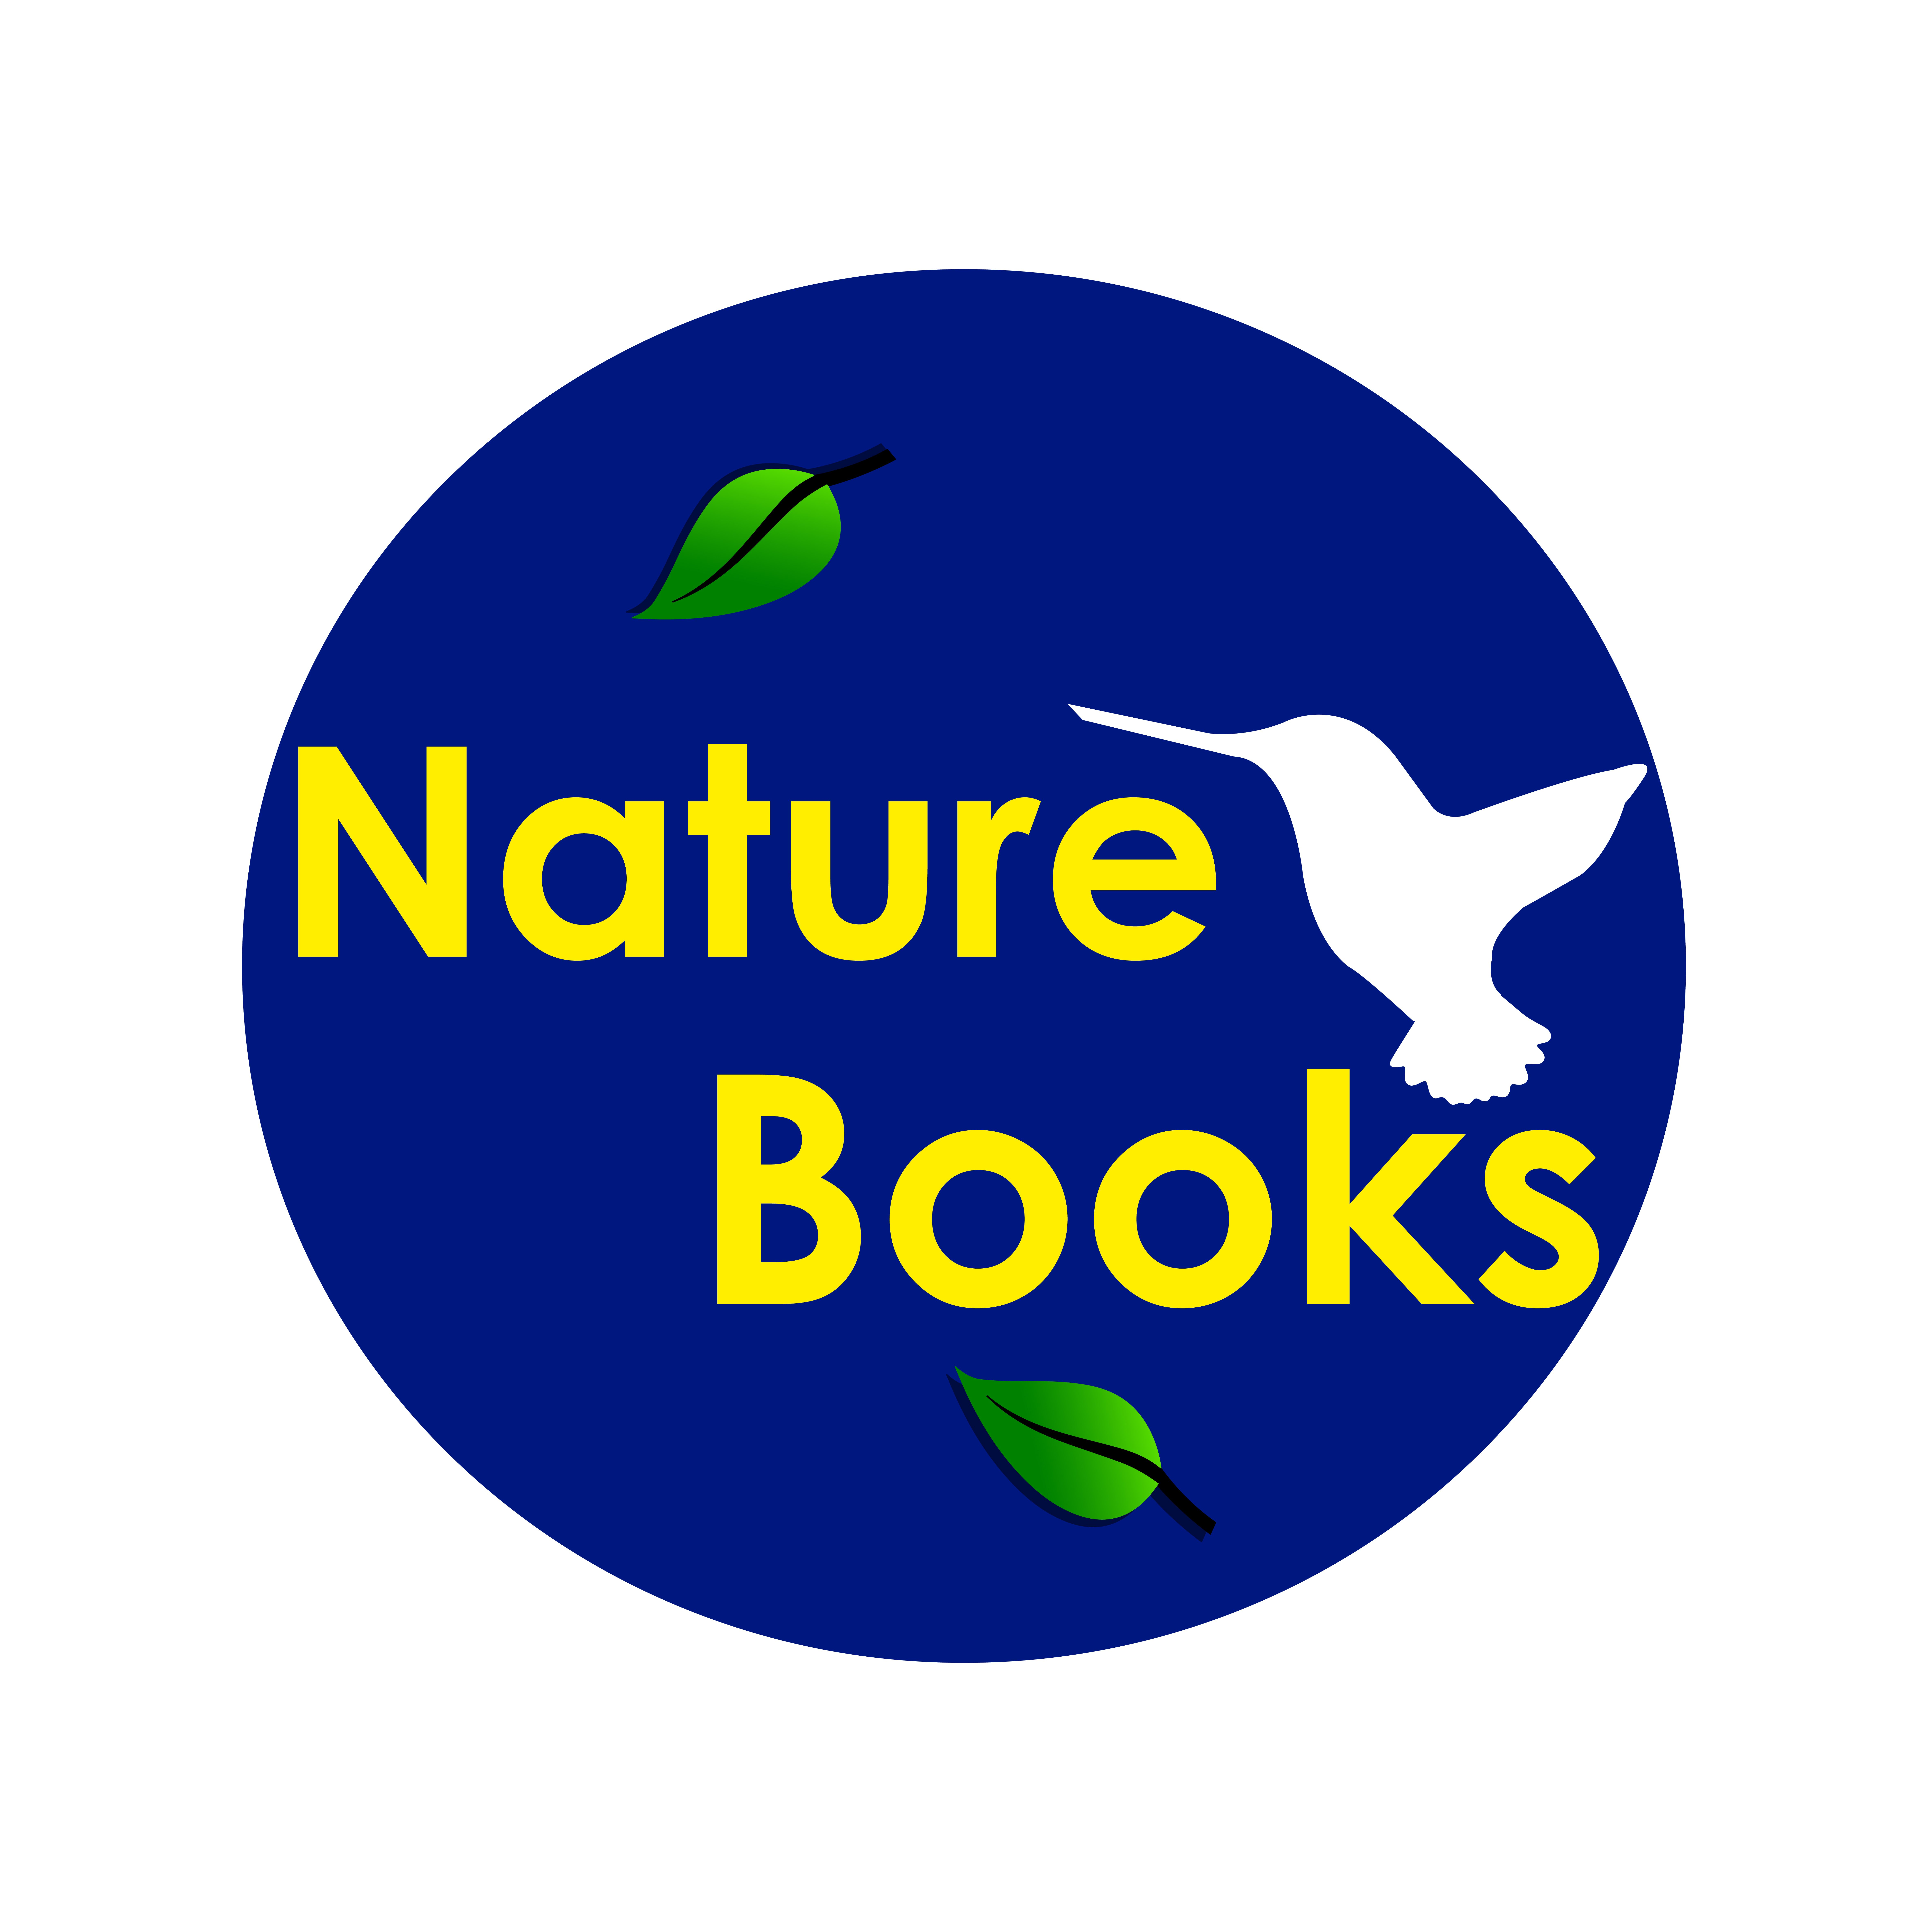 NatureBooks